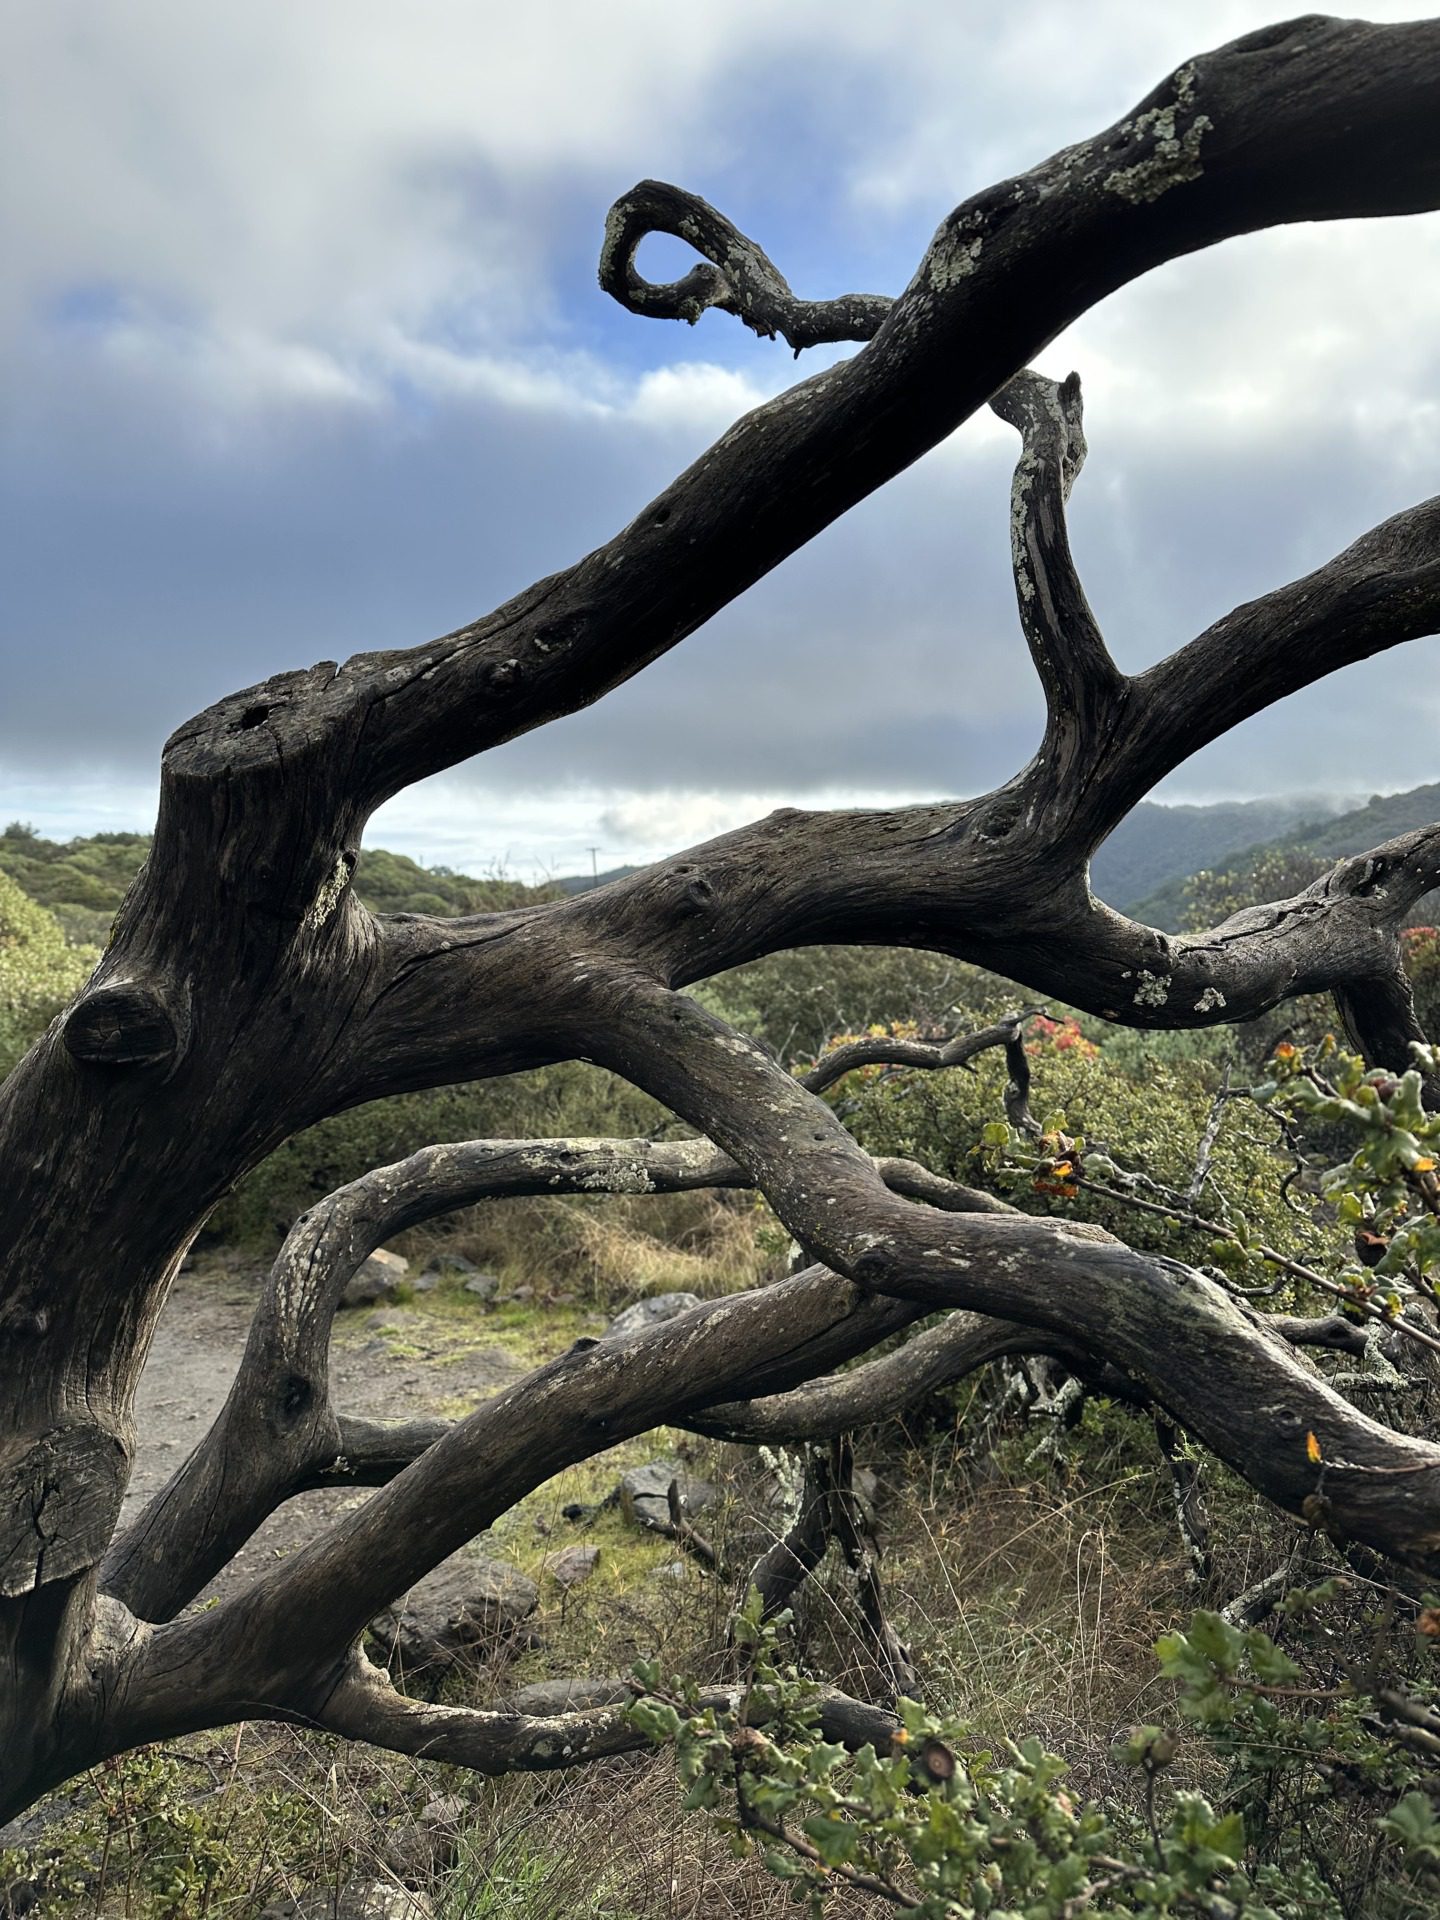 Manzanita i eukaliptusy, fot. Aleksandra Karkowska